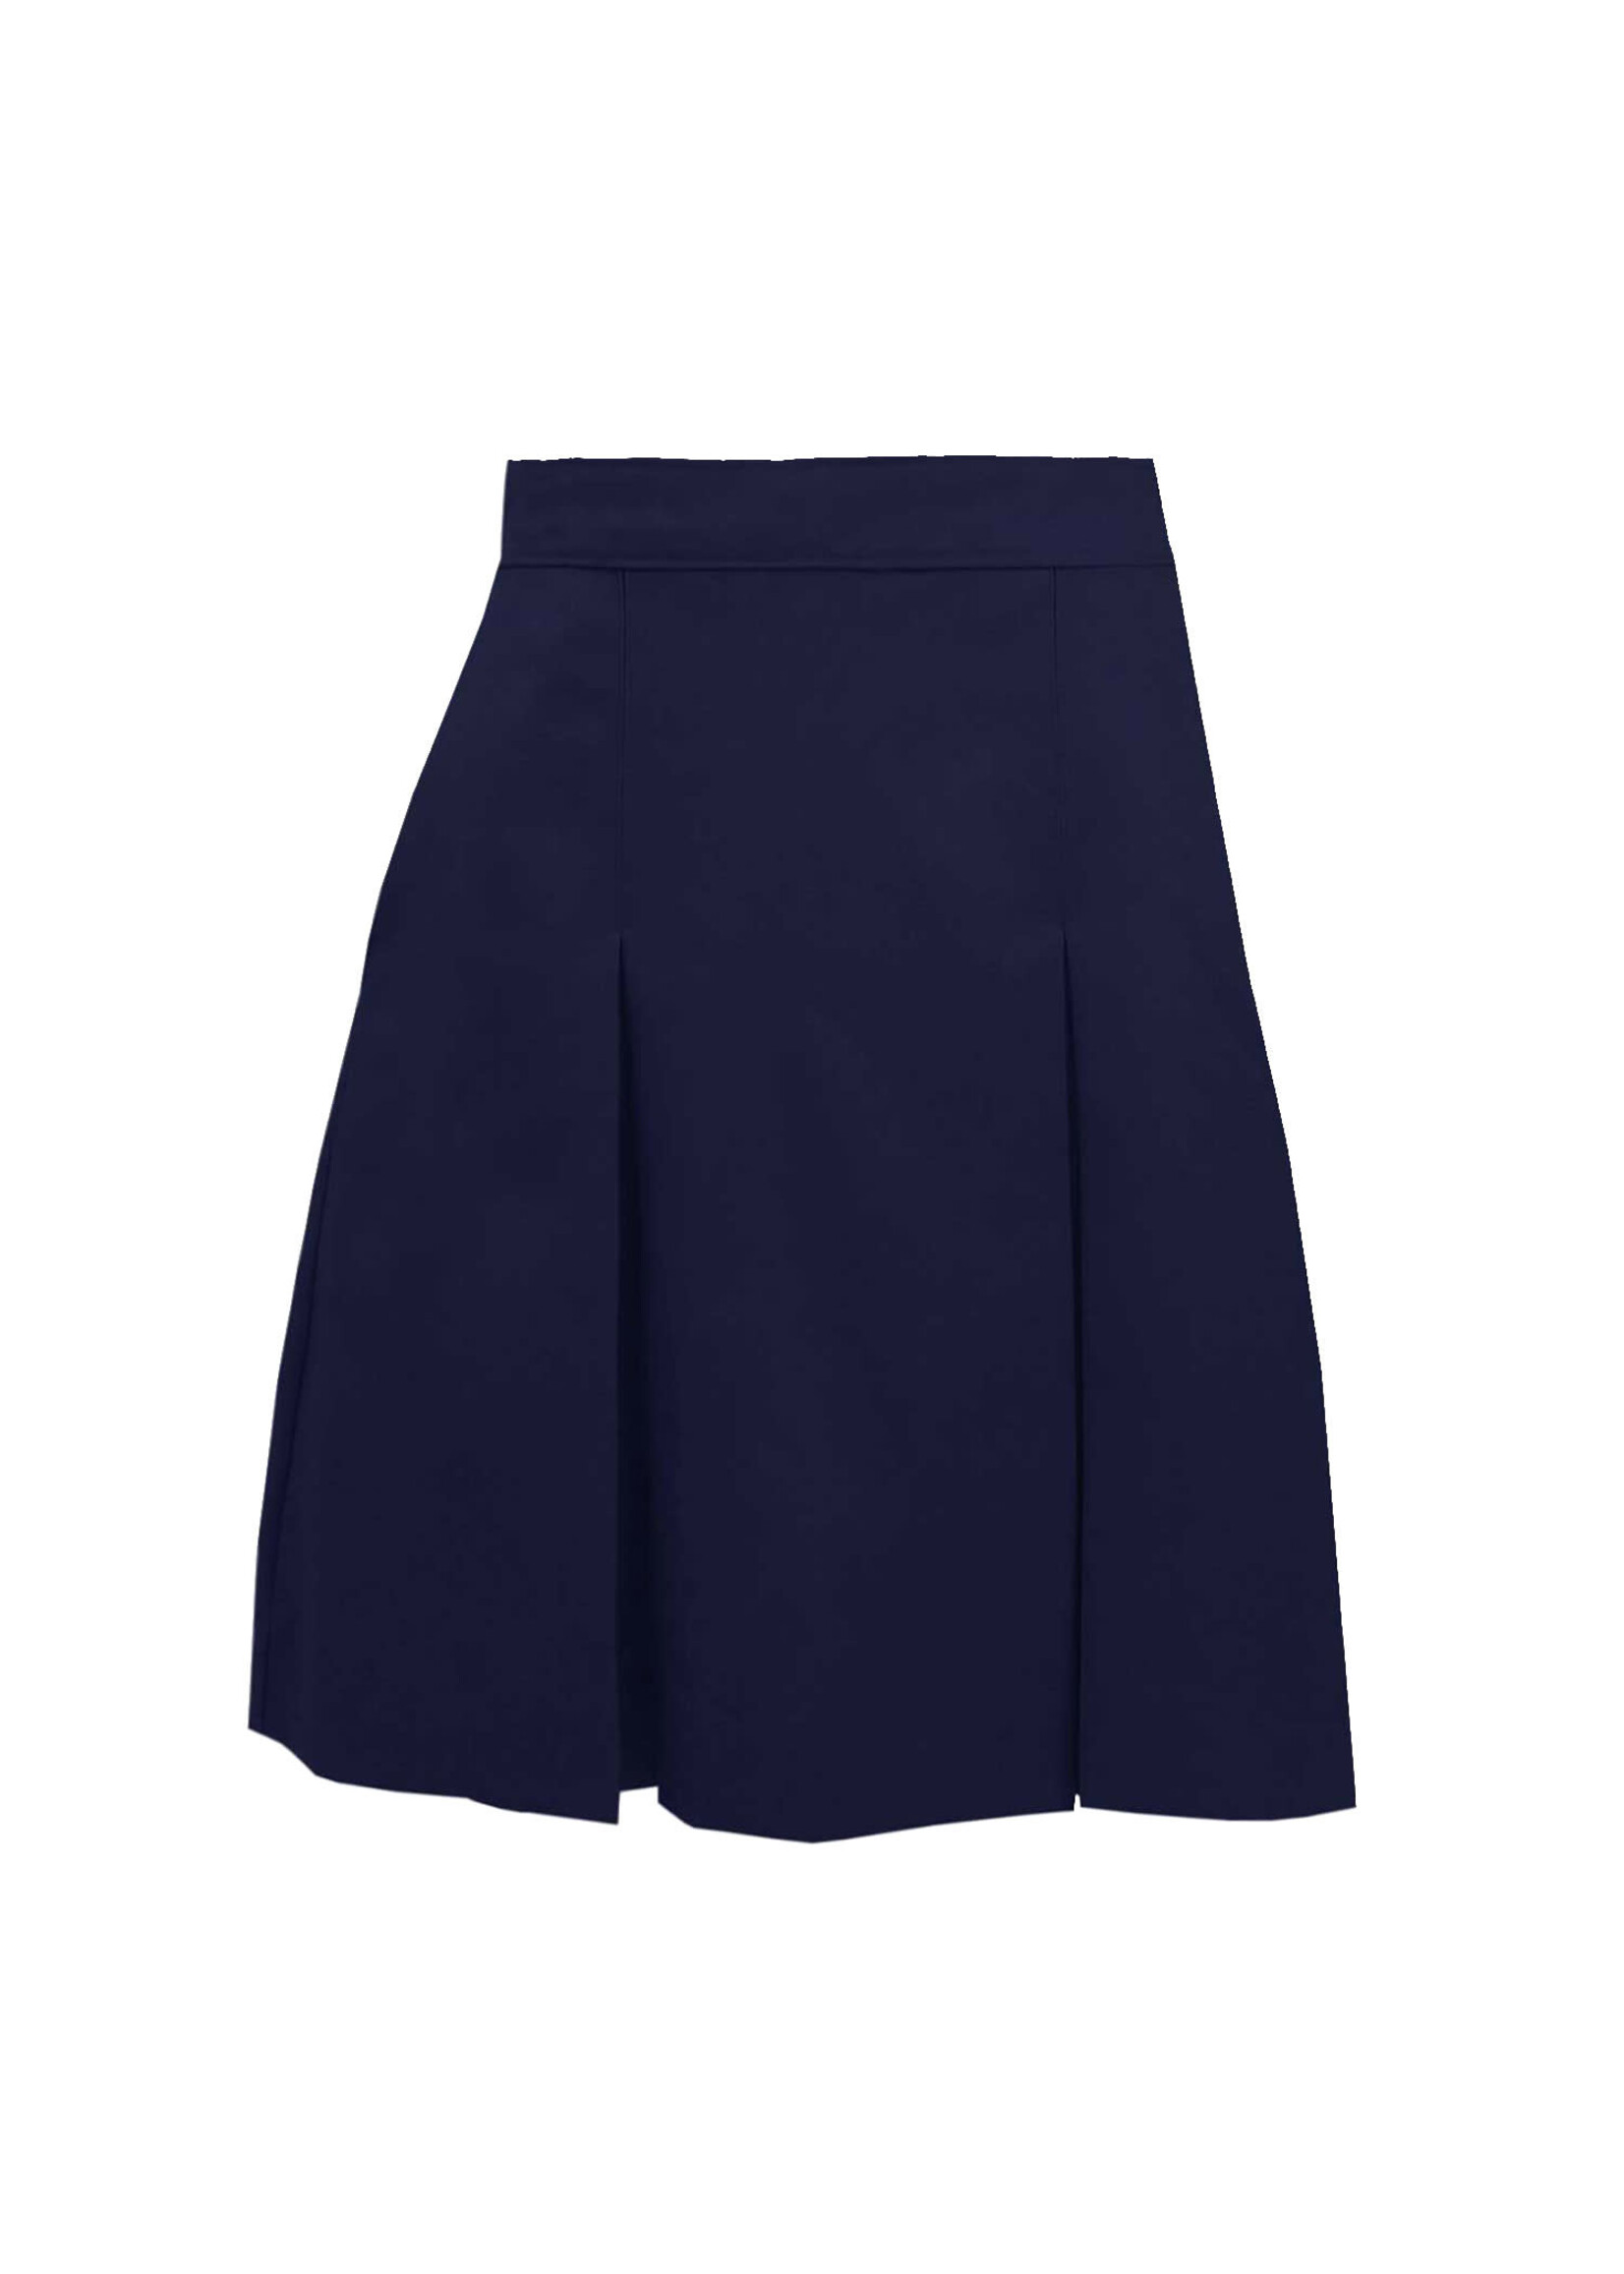 Navy 4 Pleat Solid Skirt